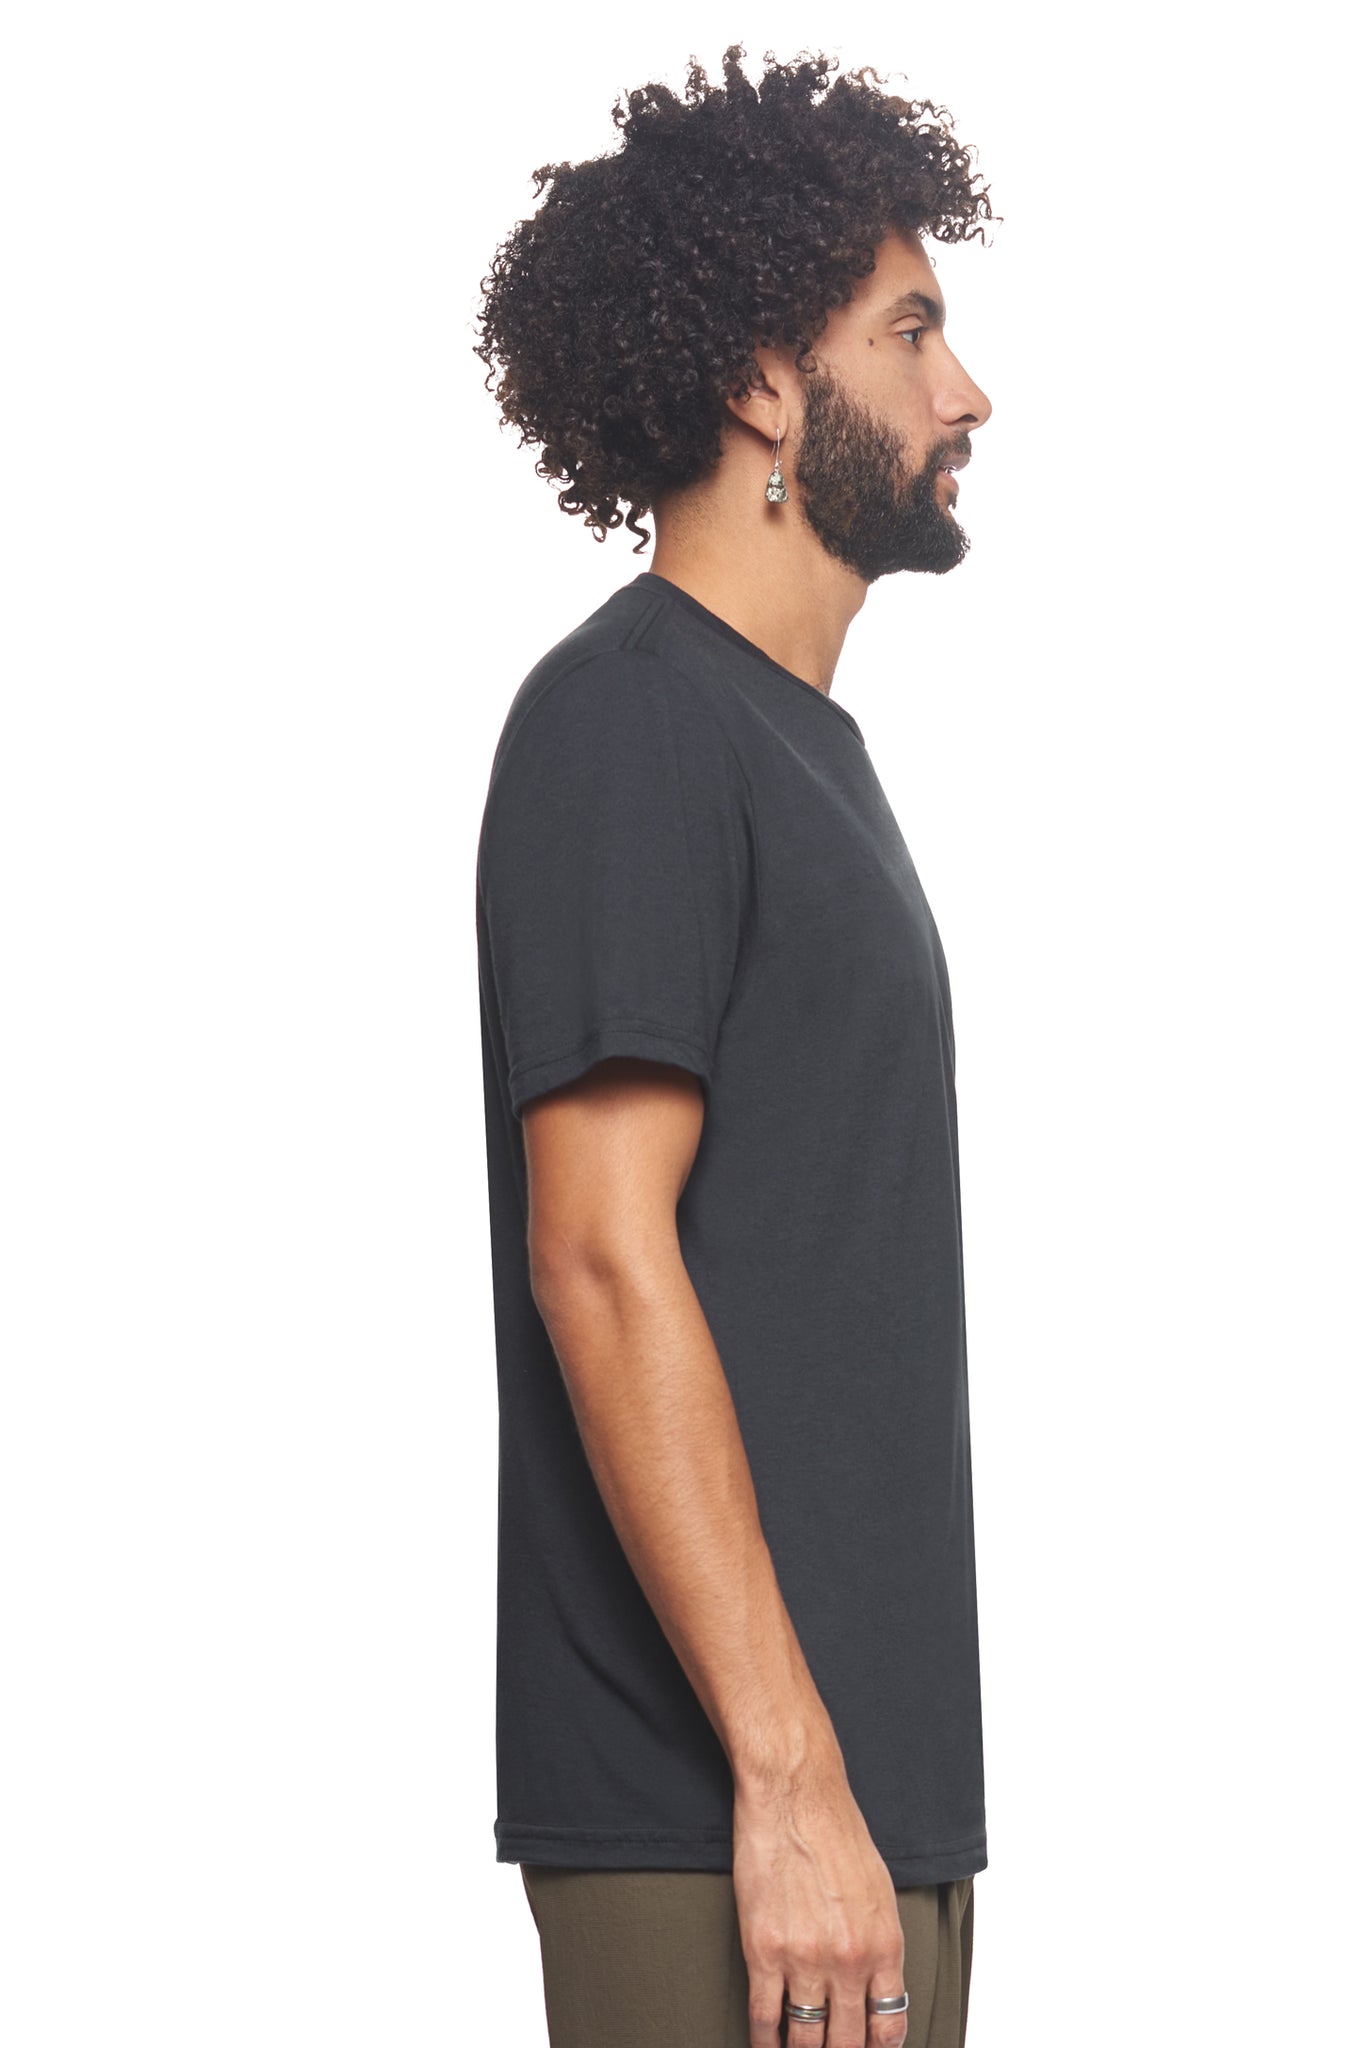 Expert Brand Wholesale Sustainable Eco-Friendly Hemp Organic Cotton Men's crewneck T-Shirt Made in the USA 2#black